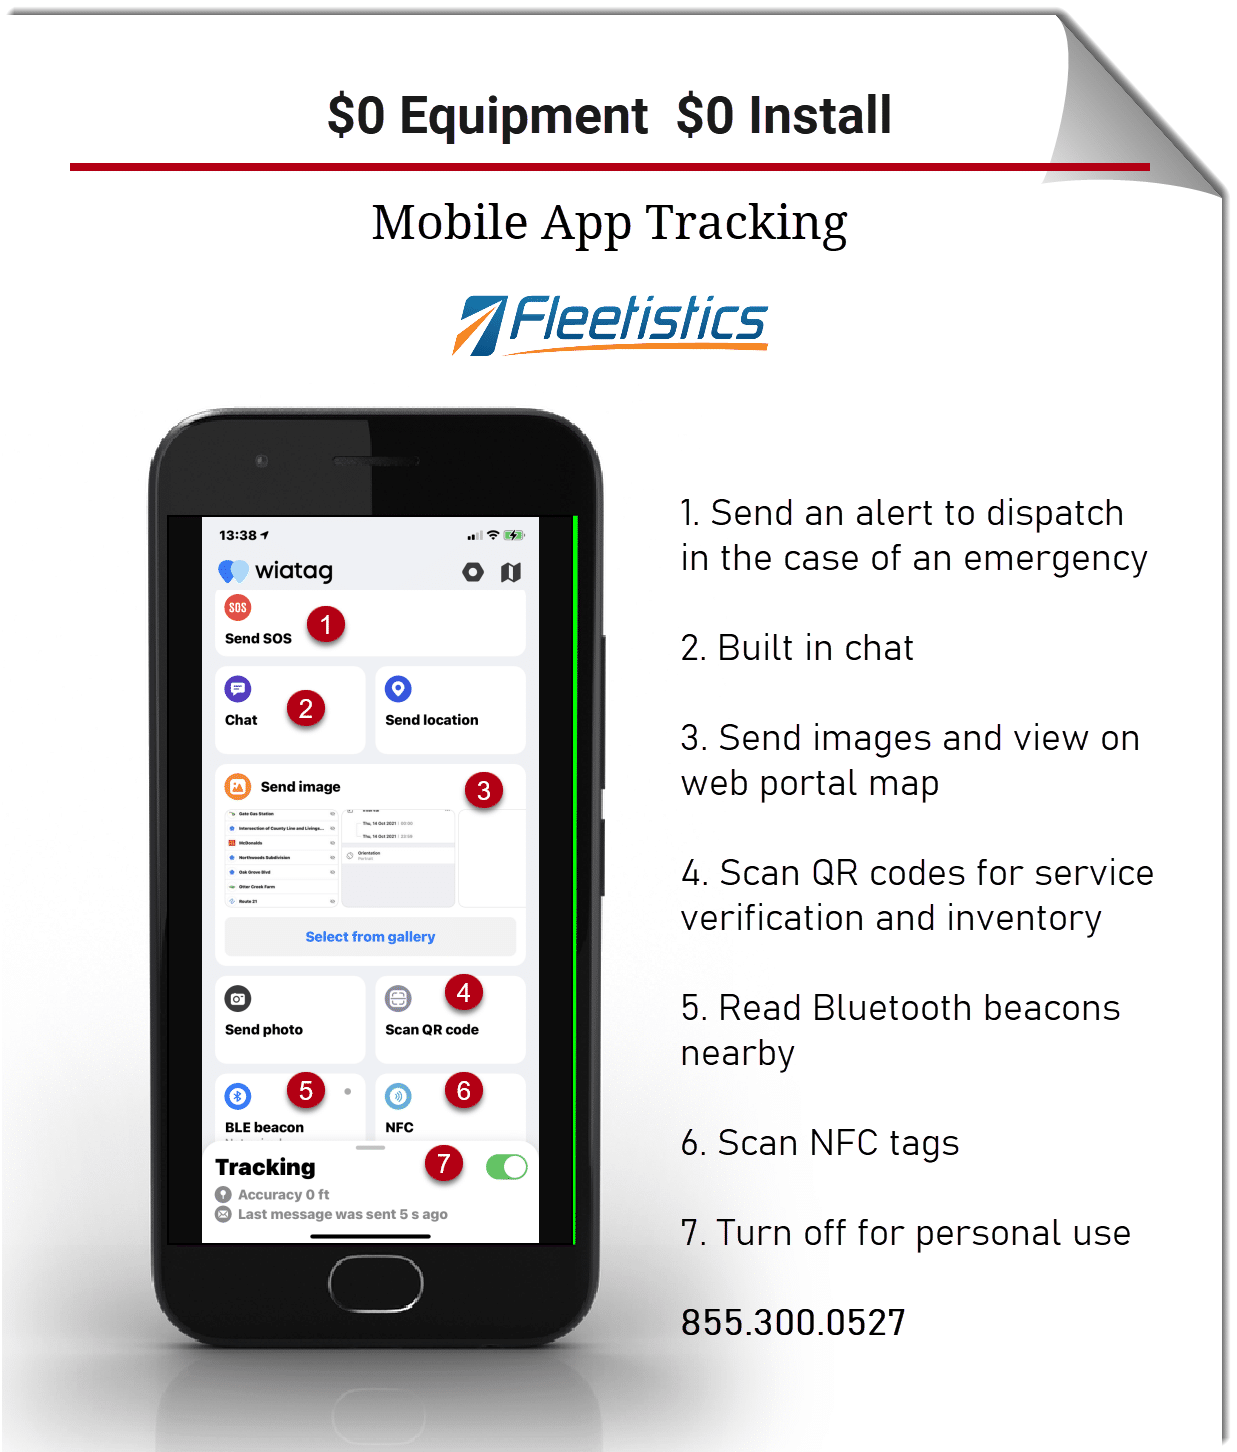 Mobile App Tracking - Fleets